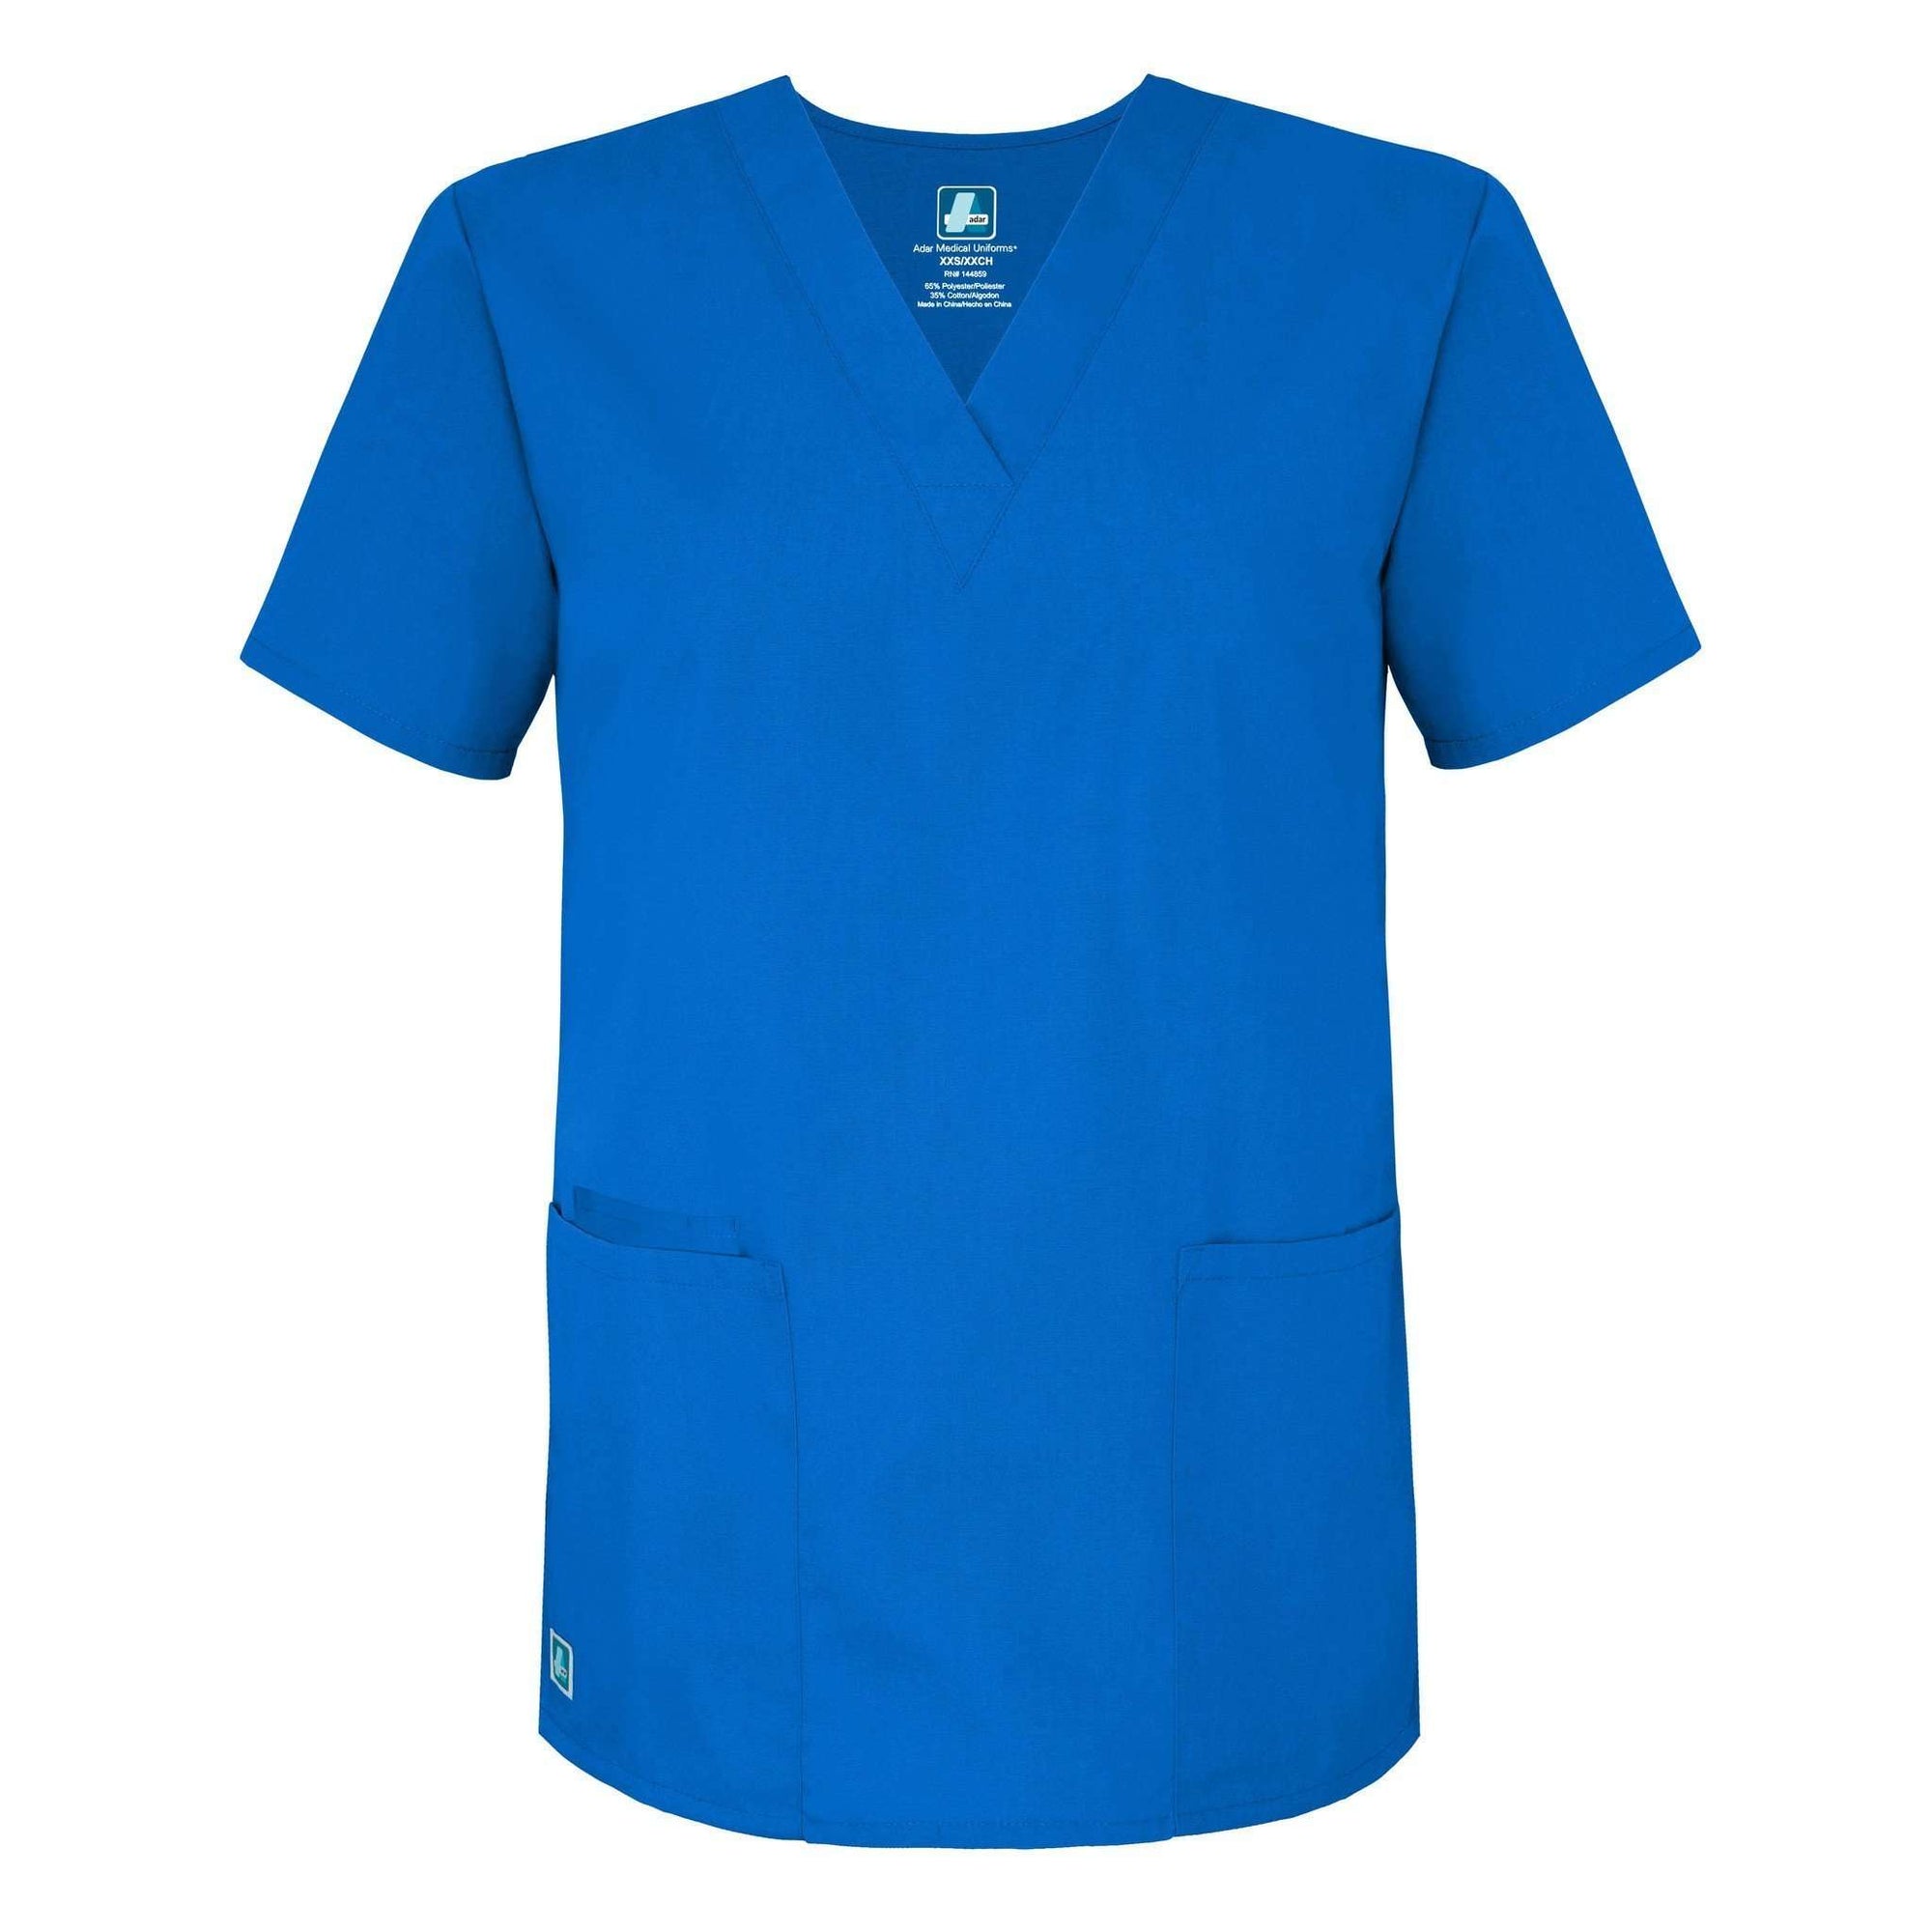  Adar - uniforms Medical Uniform Tops uniforms online Adar Universal Unisex V-Neck 2 Pocket Scrub Top Regal Blue S - SchoolUniforms.com